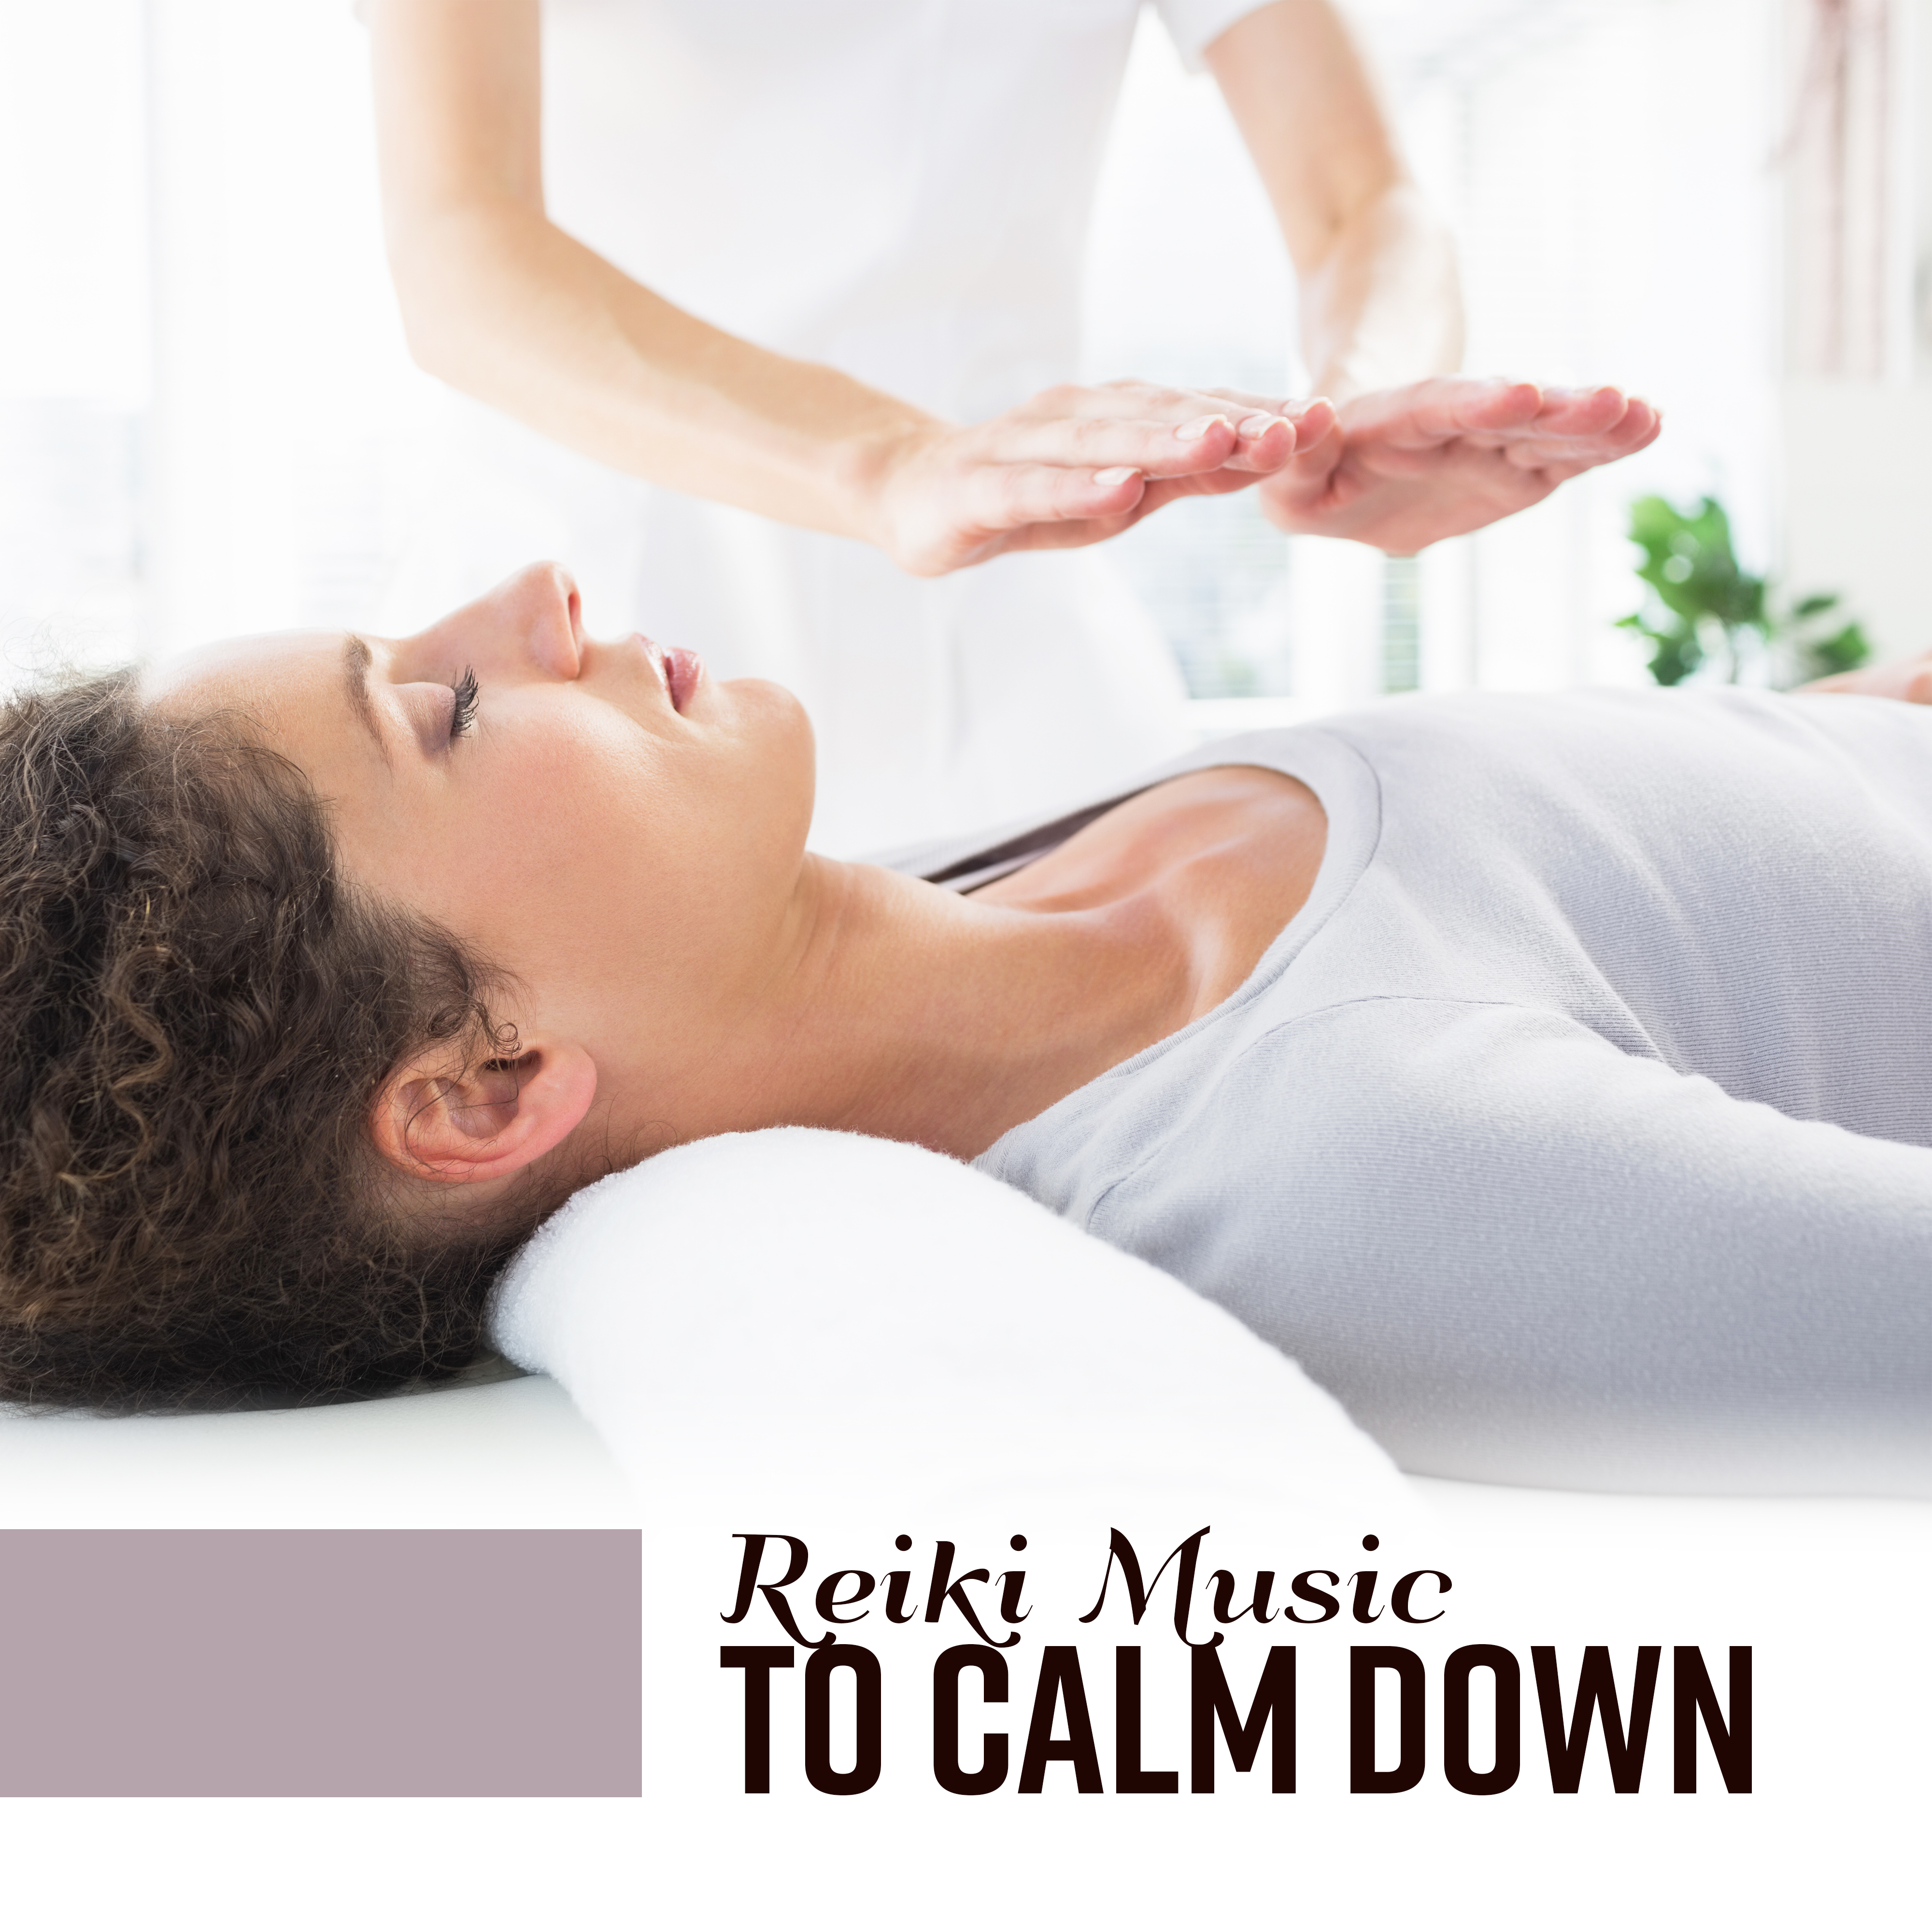 Reiki Music to Calm Down